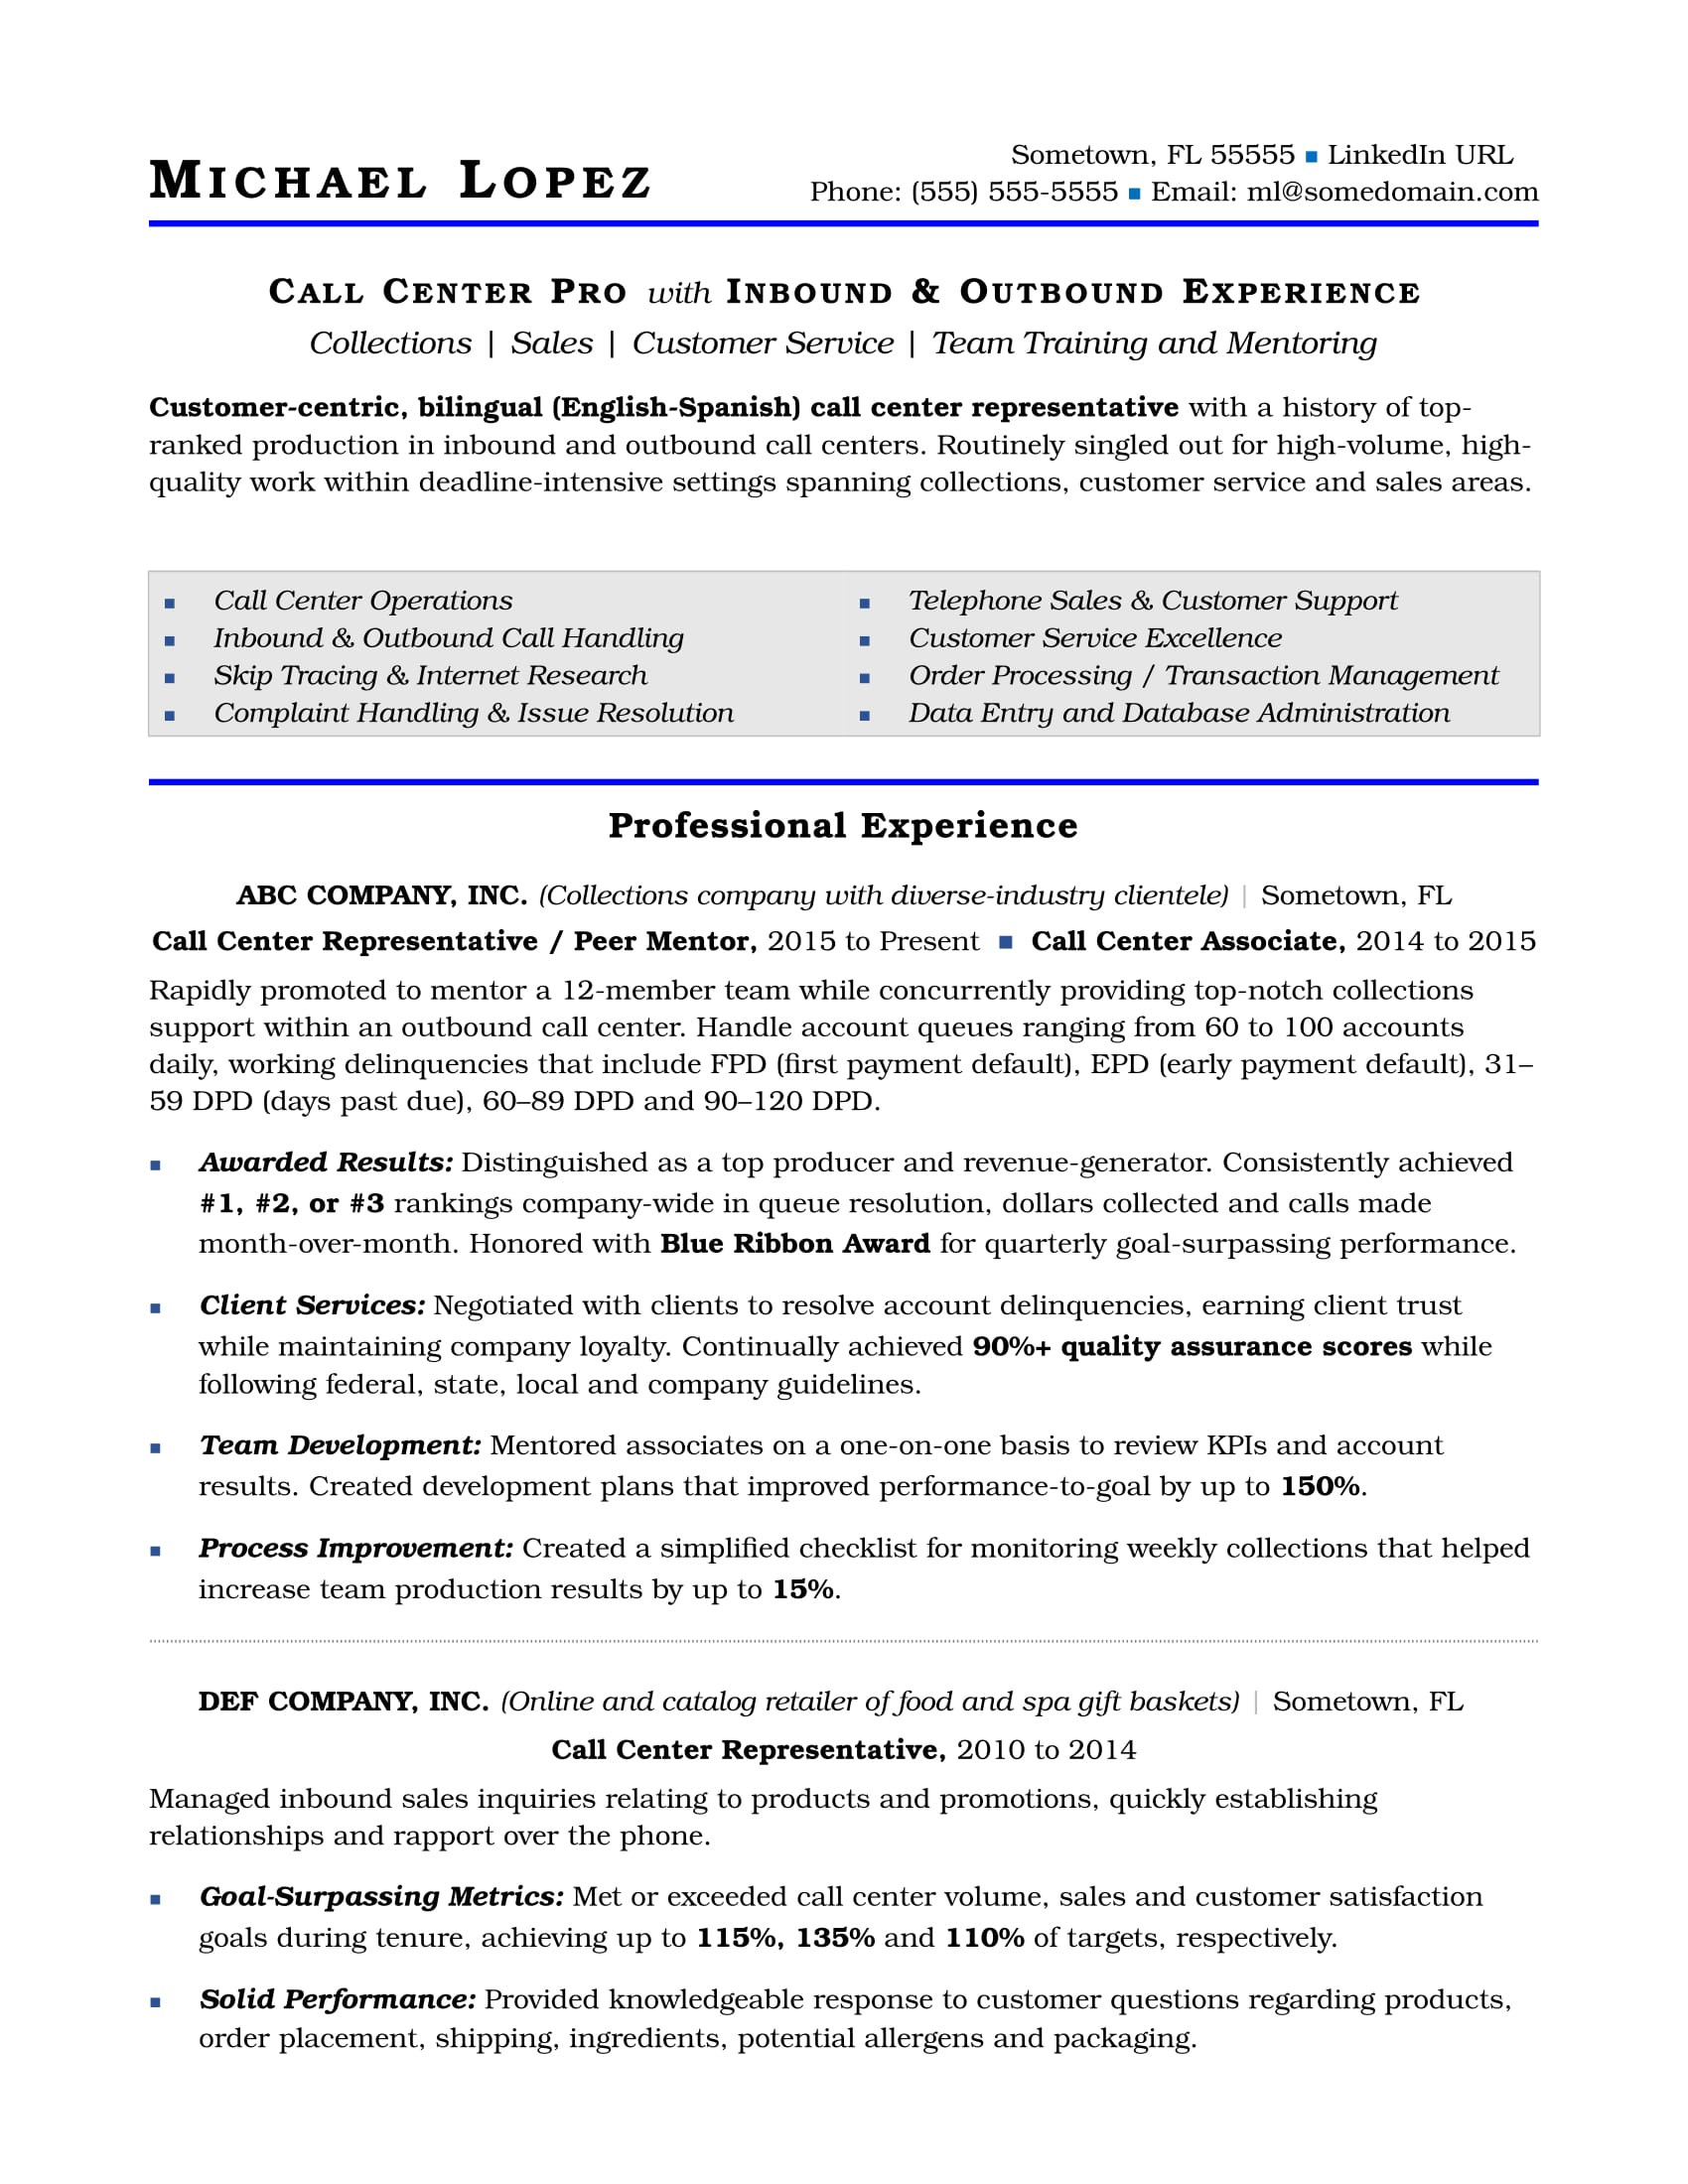 Sample Resume Objectives Customer Service Manager Call Center Resume Sample Monster.com